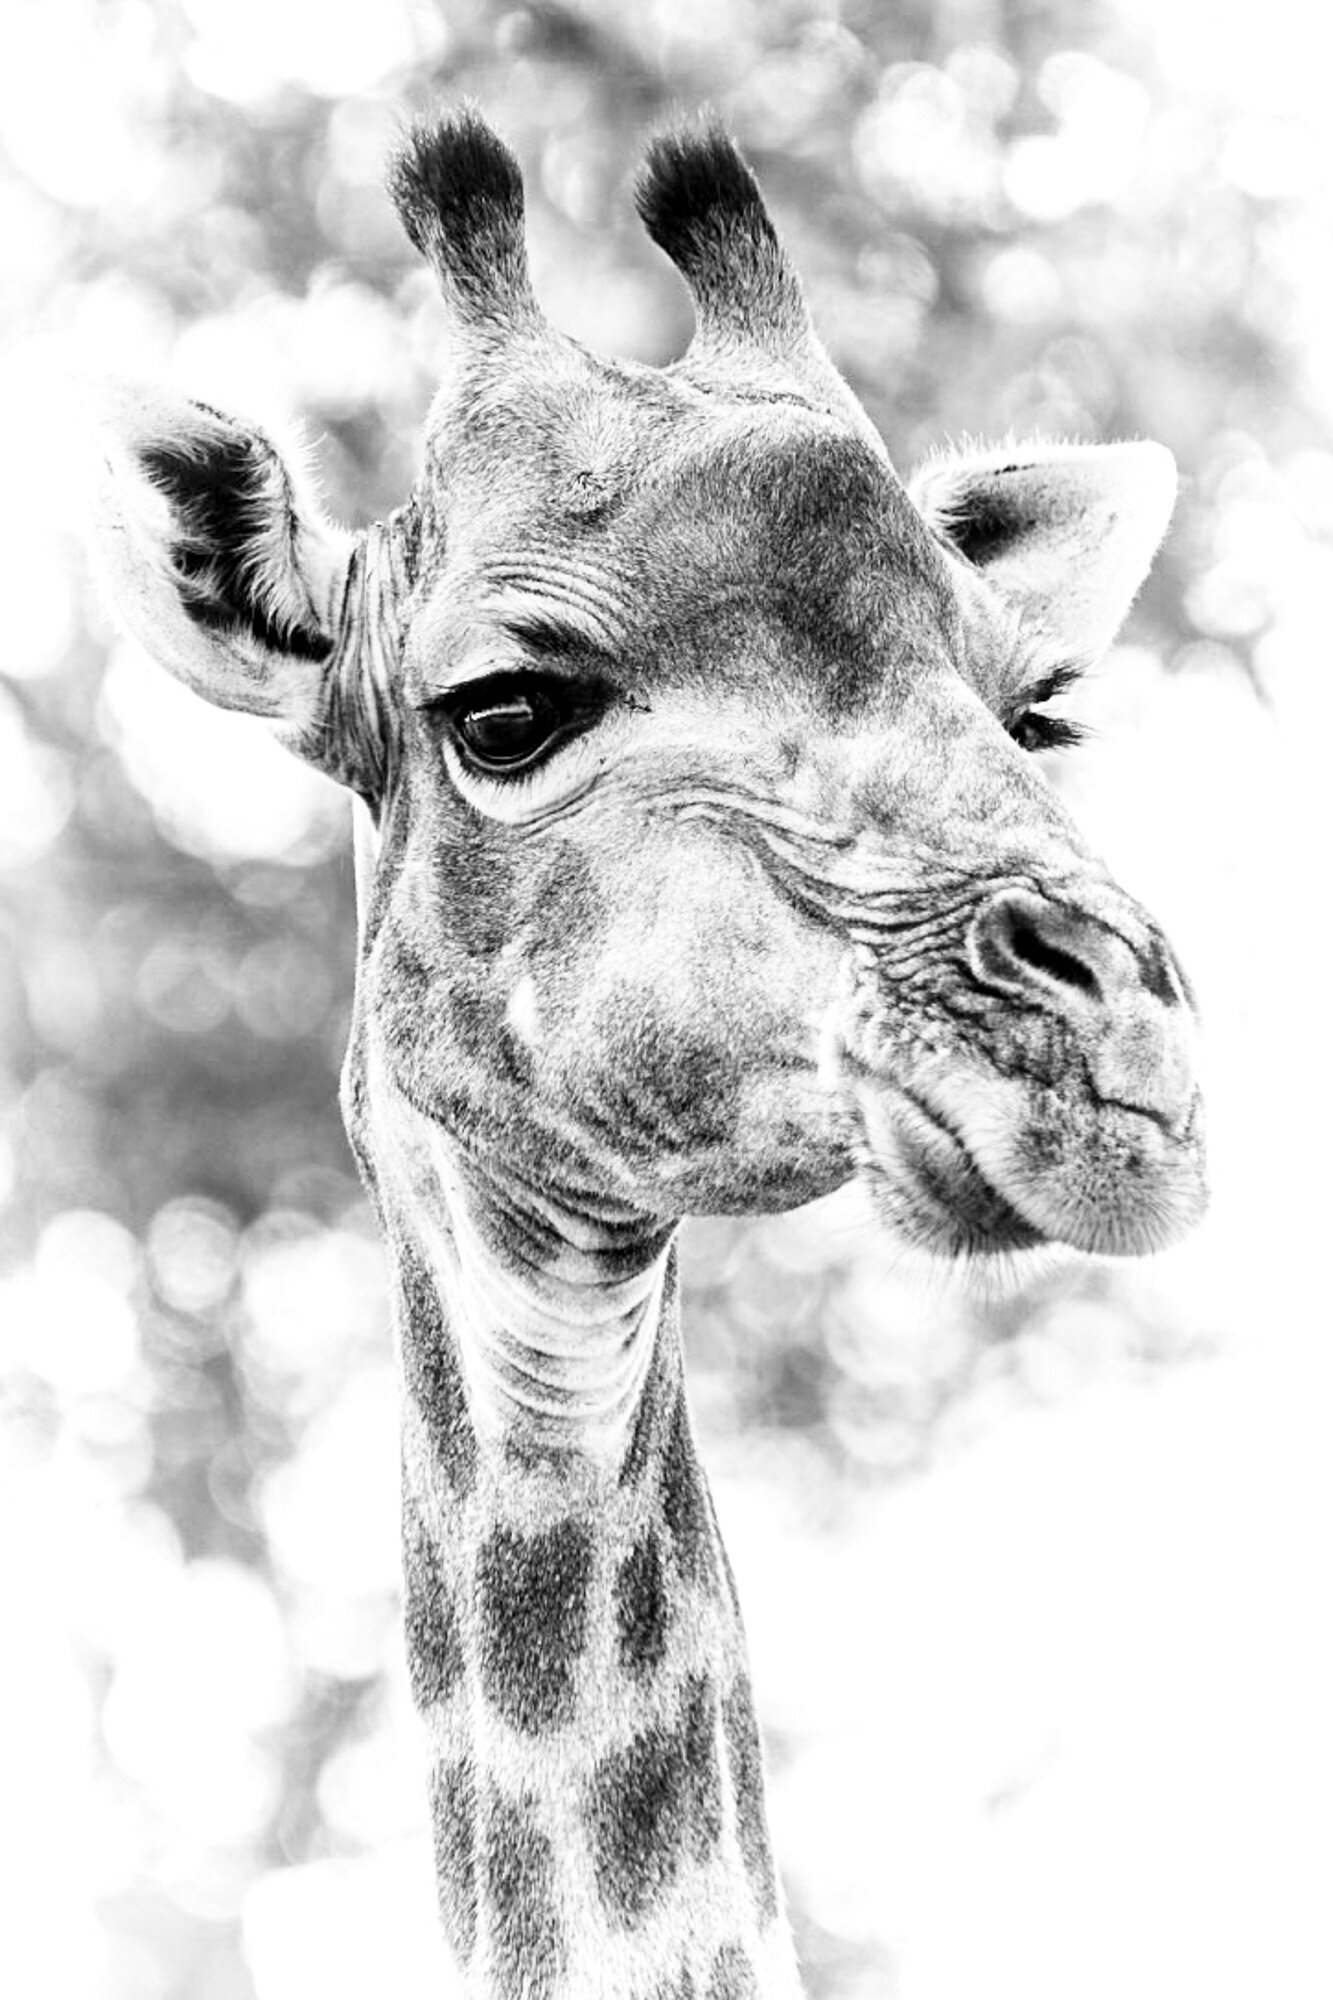 Giraffe_close-up_South_Africa_Safari_2016_©_Howard_Wolff-10.jpg